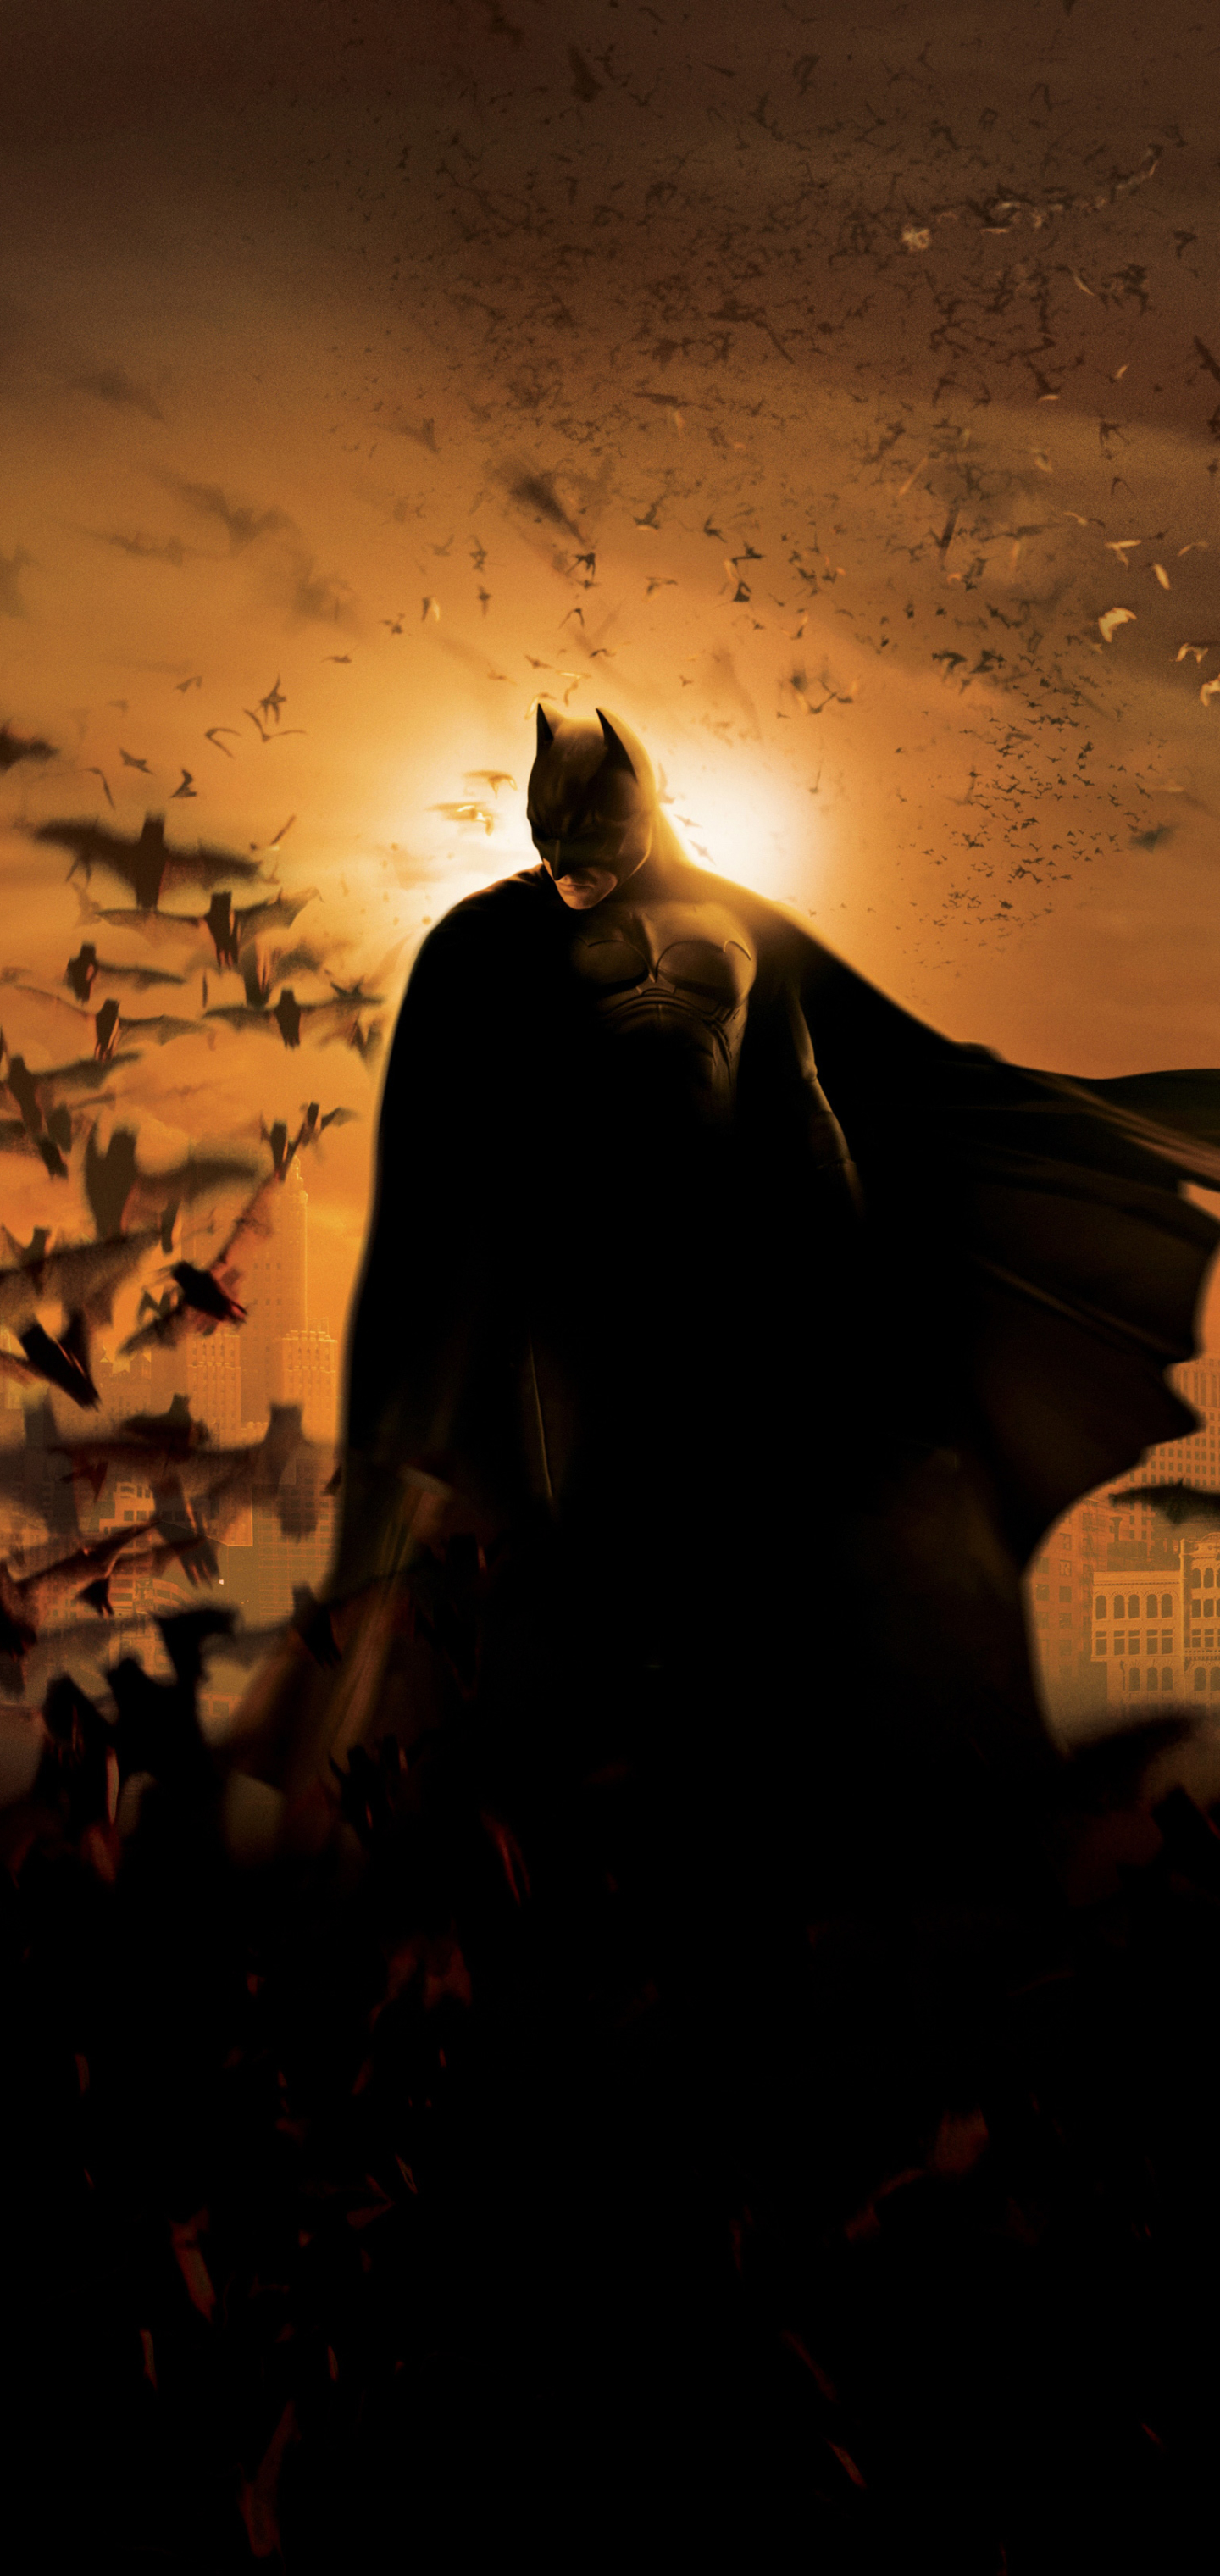 superhero, bruce wayne, batman, movie, batman begins, gotham city, bat, dc comics, night